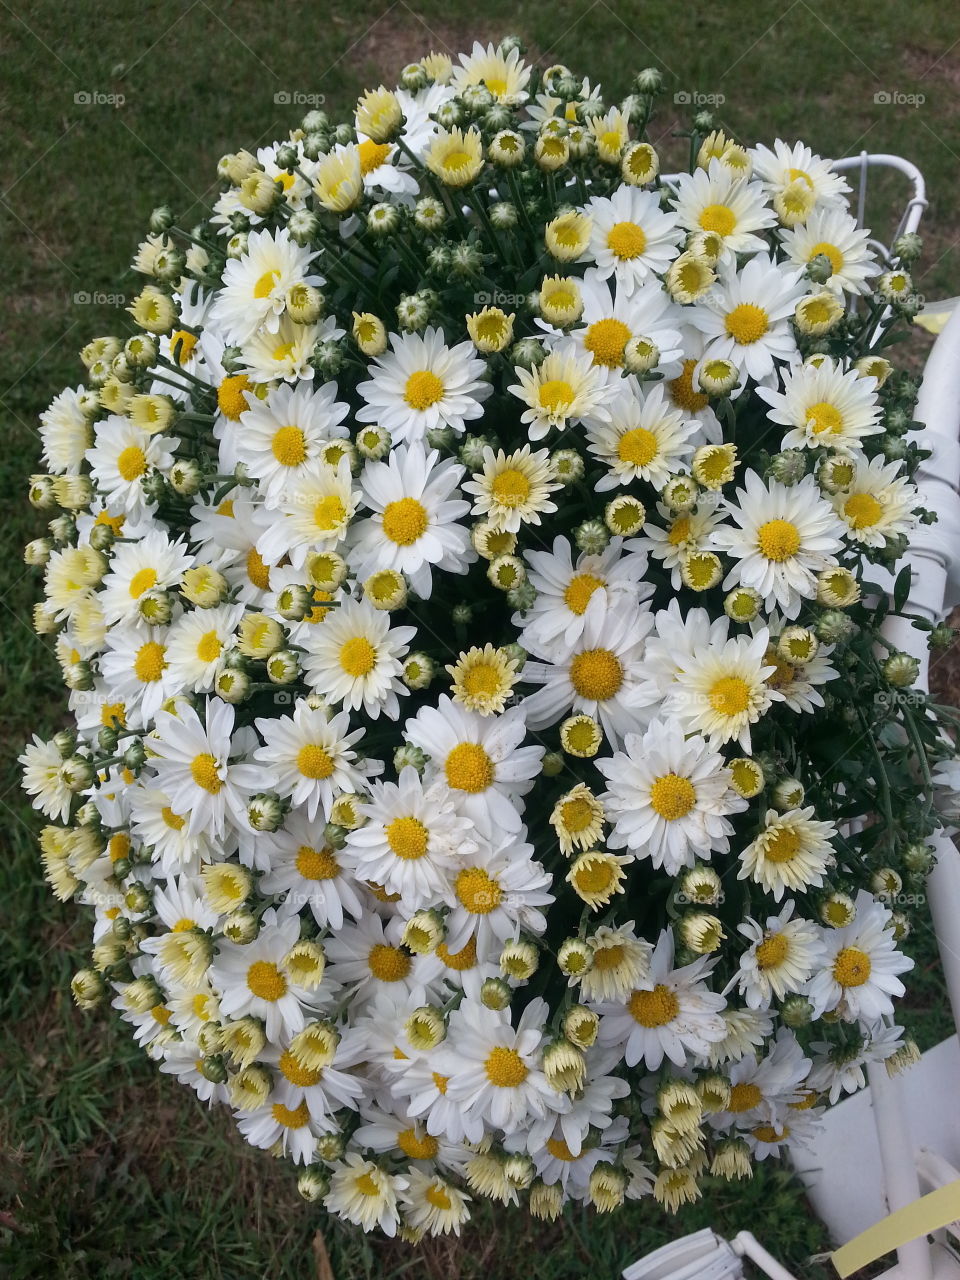 Daisy flower for wedding